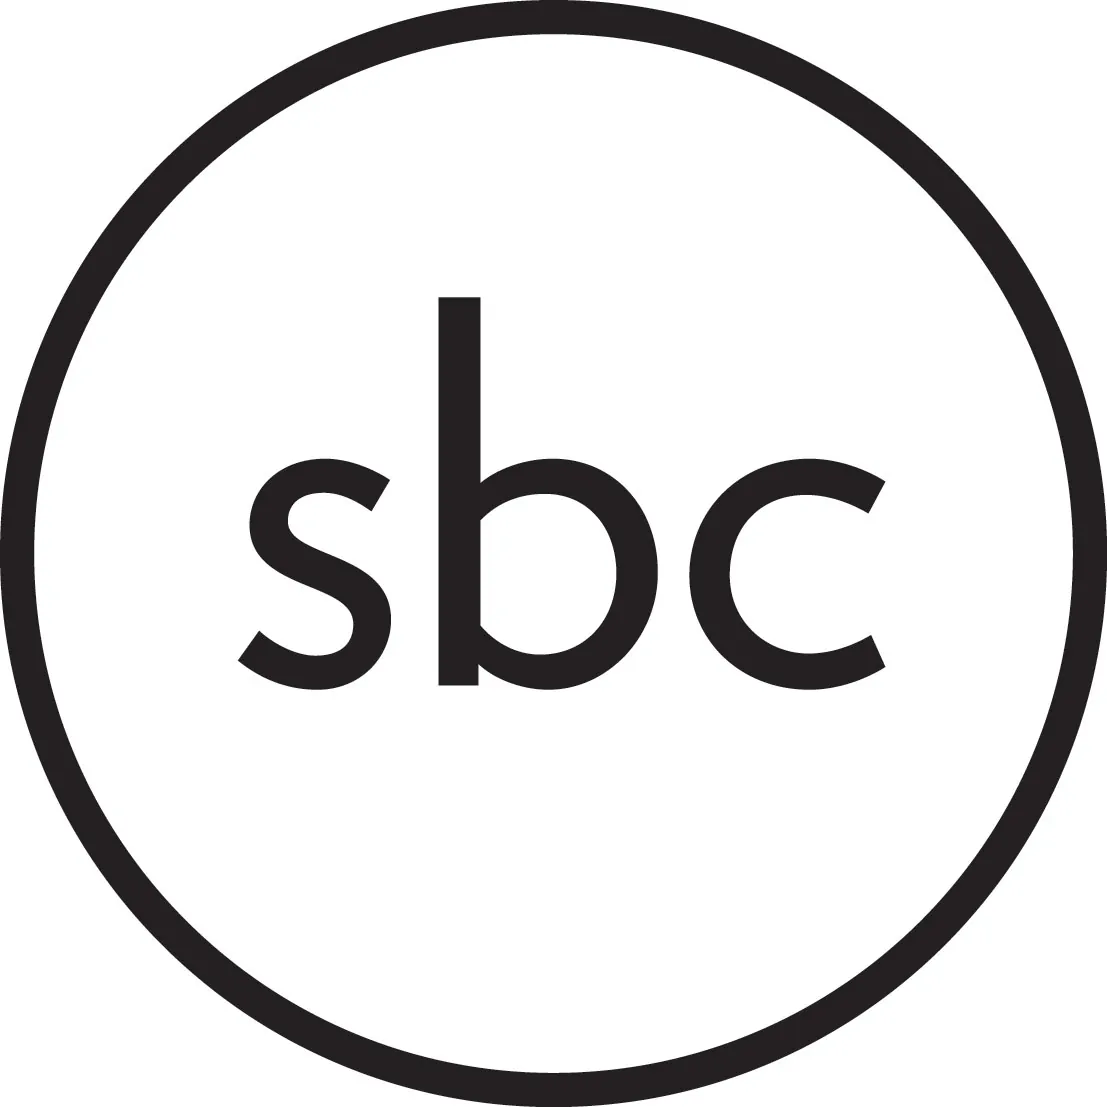 SBC Senior Classic Vector Logo - Download Free SVG Icon | Worldvectorlogo